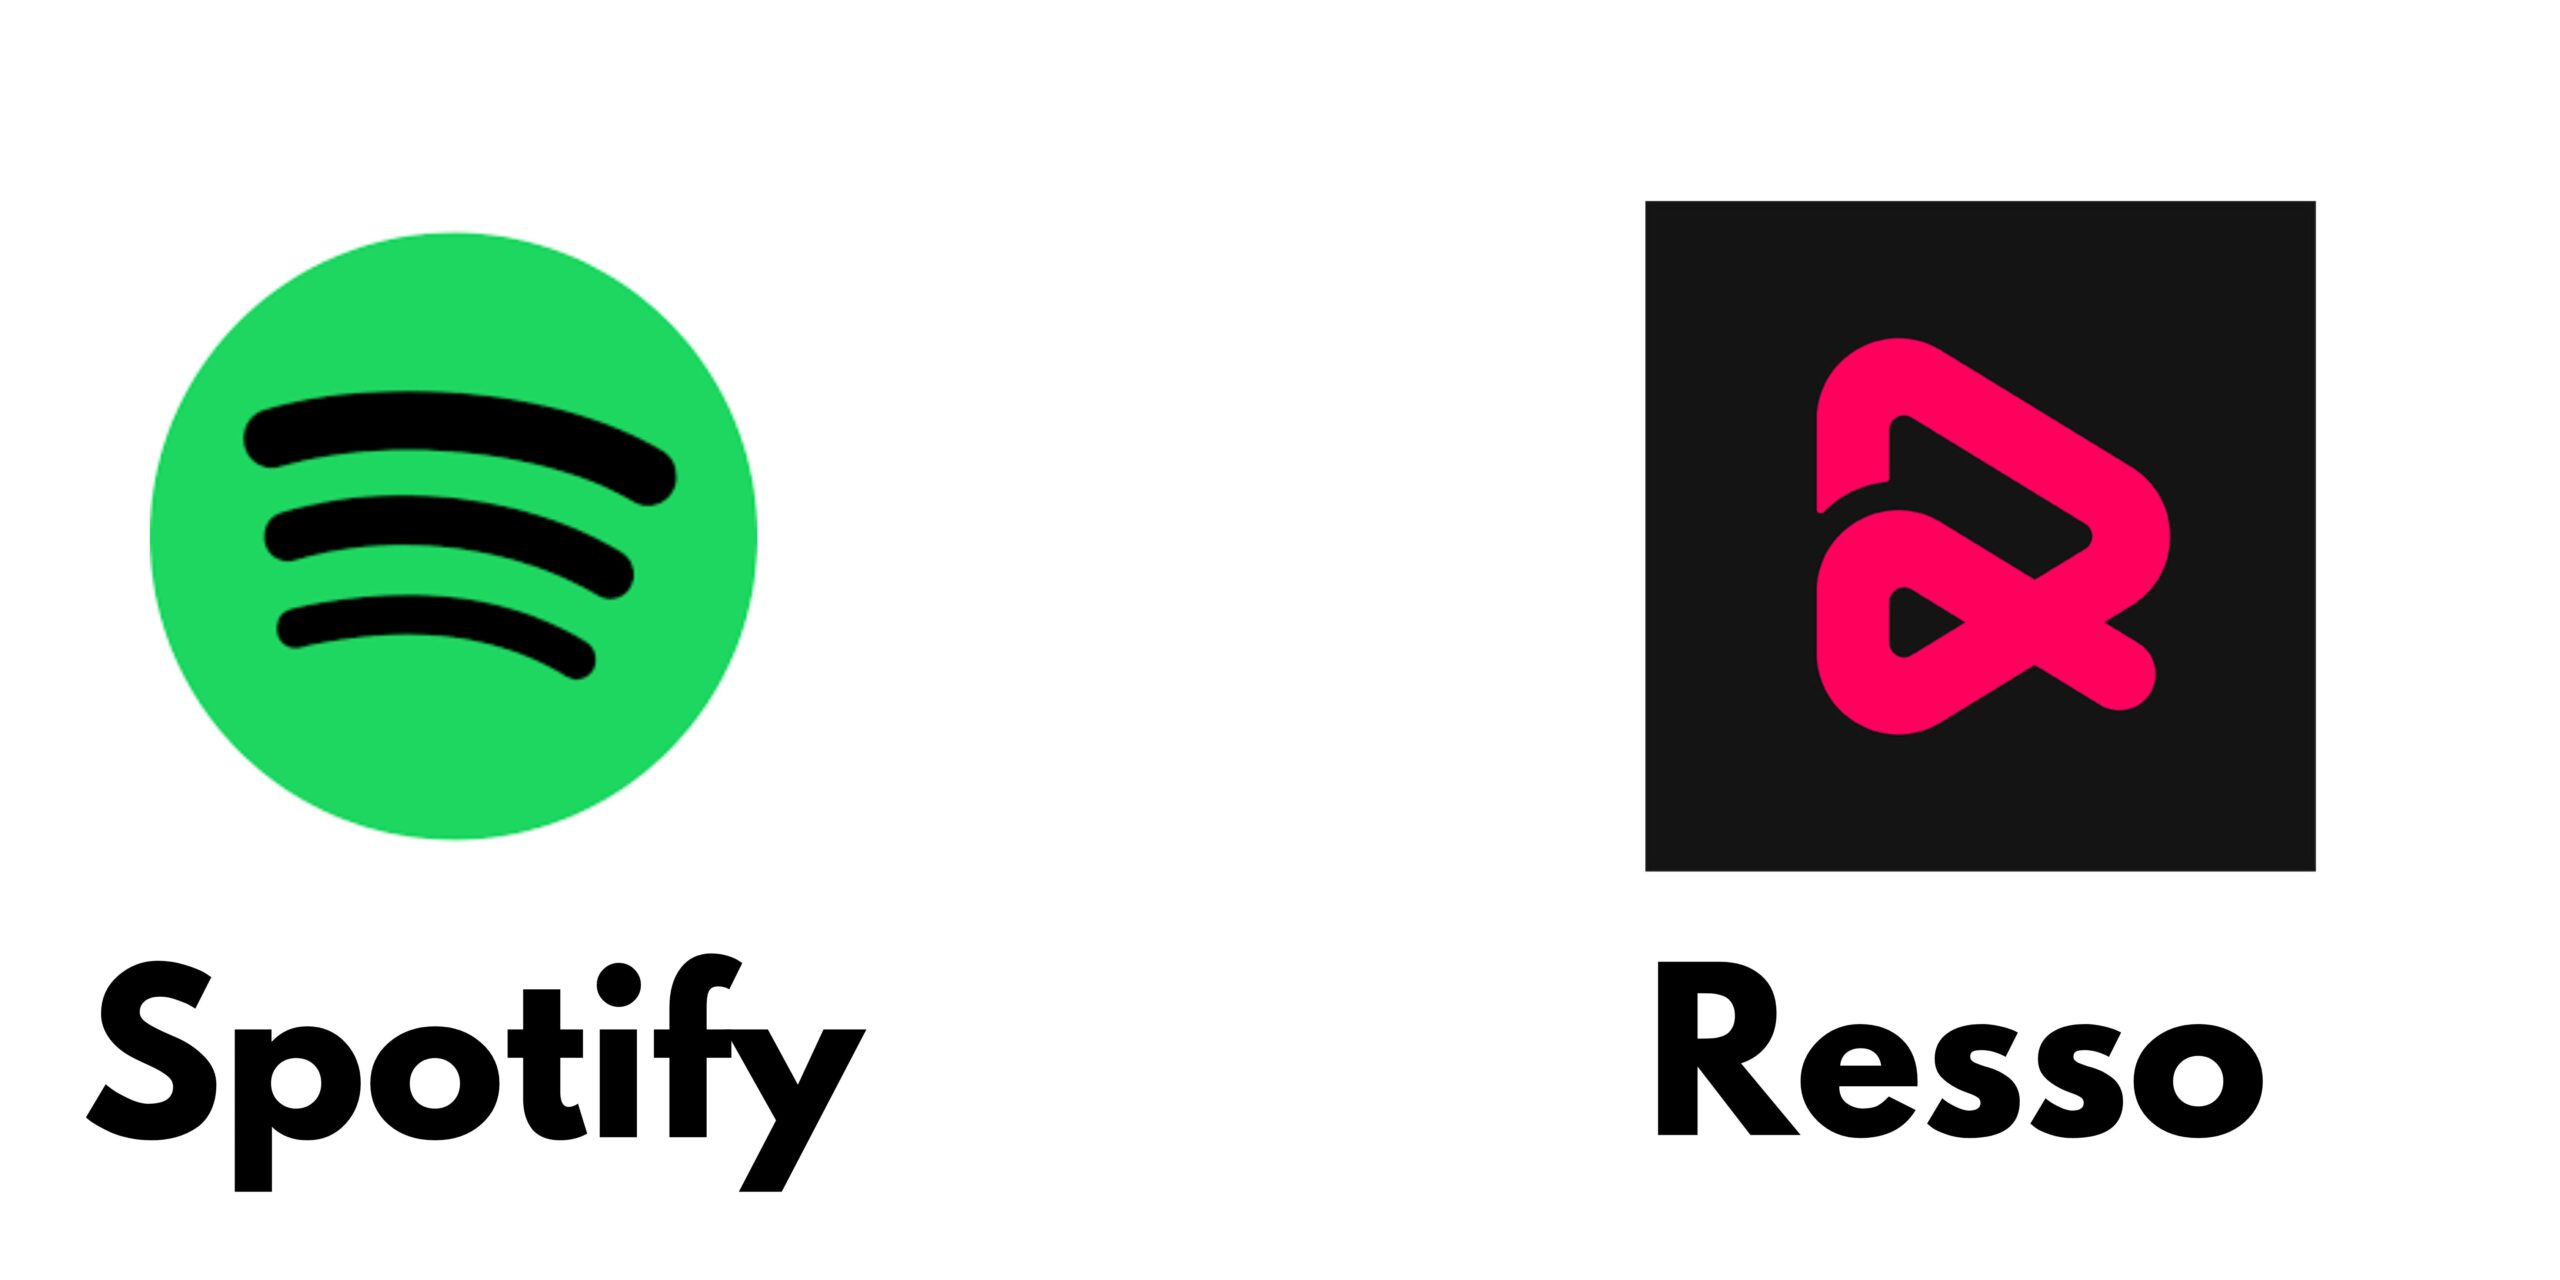 Spotify vs Resso